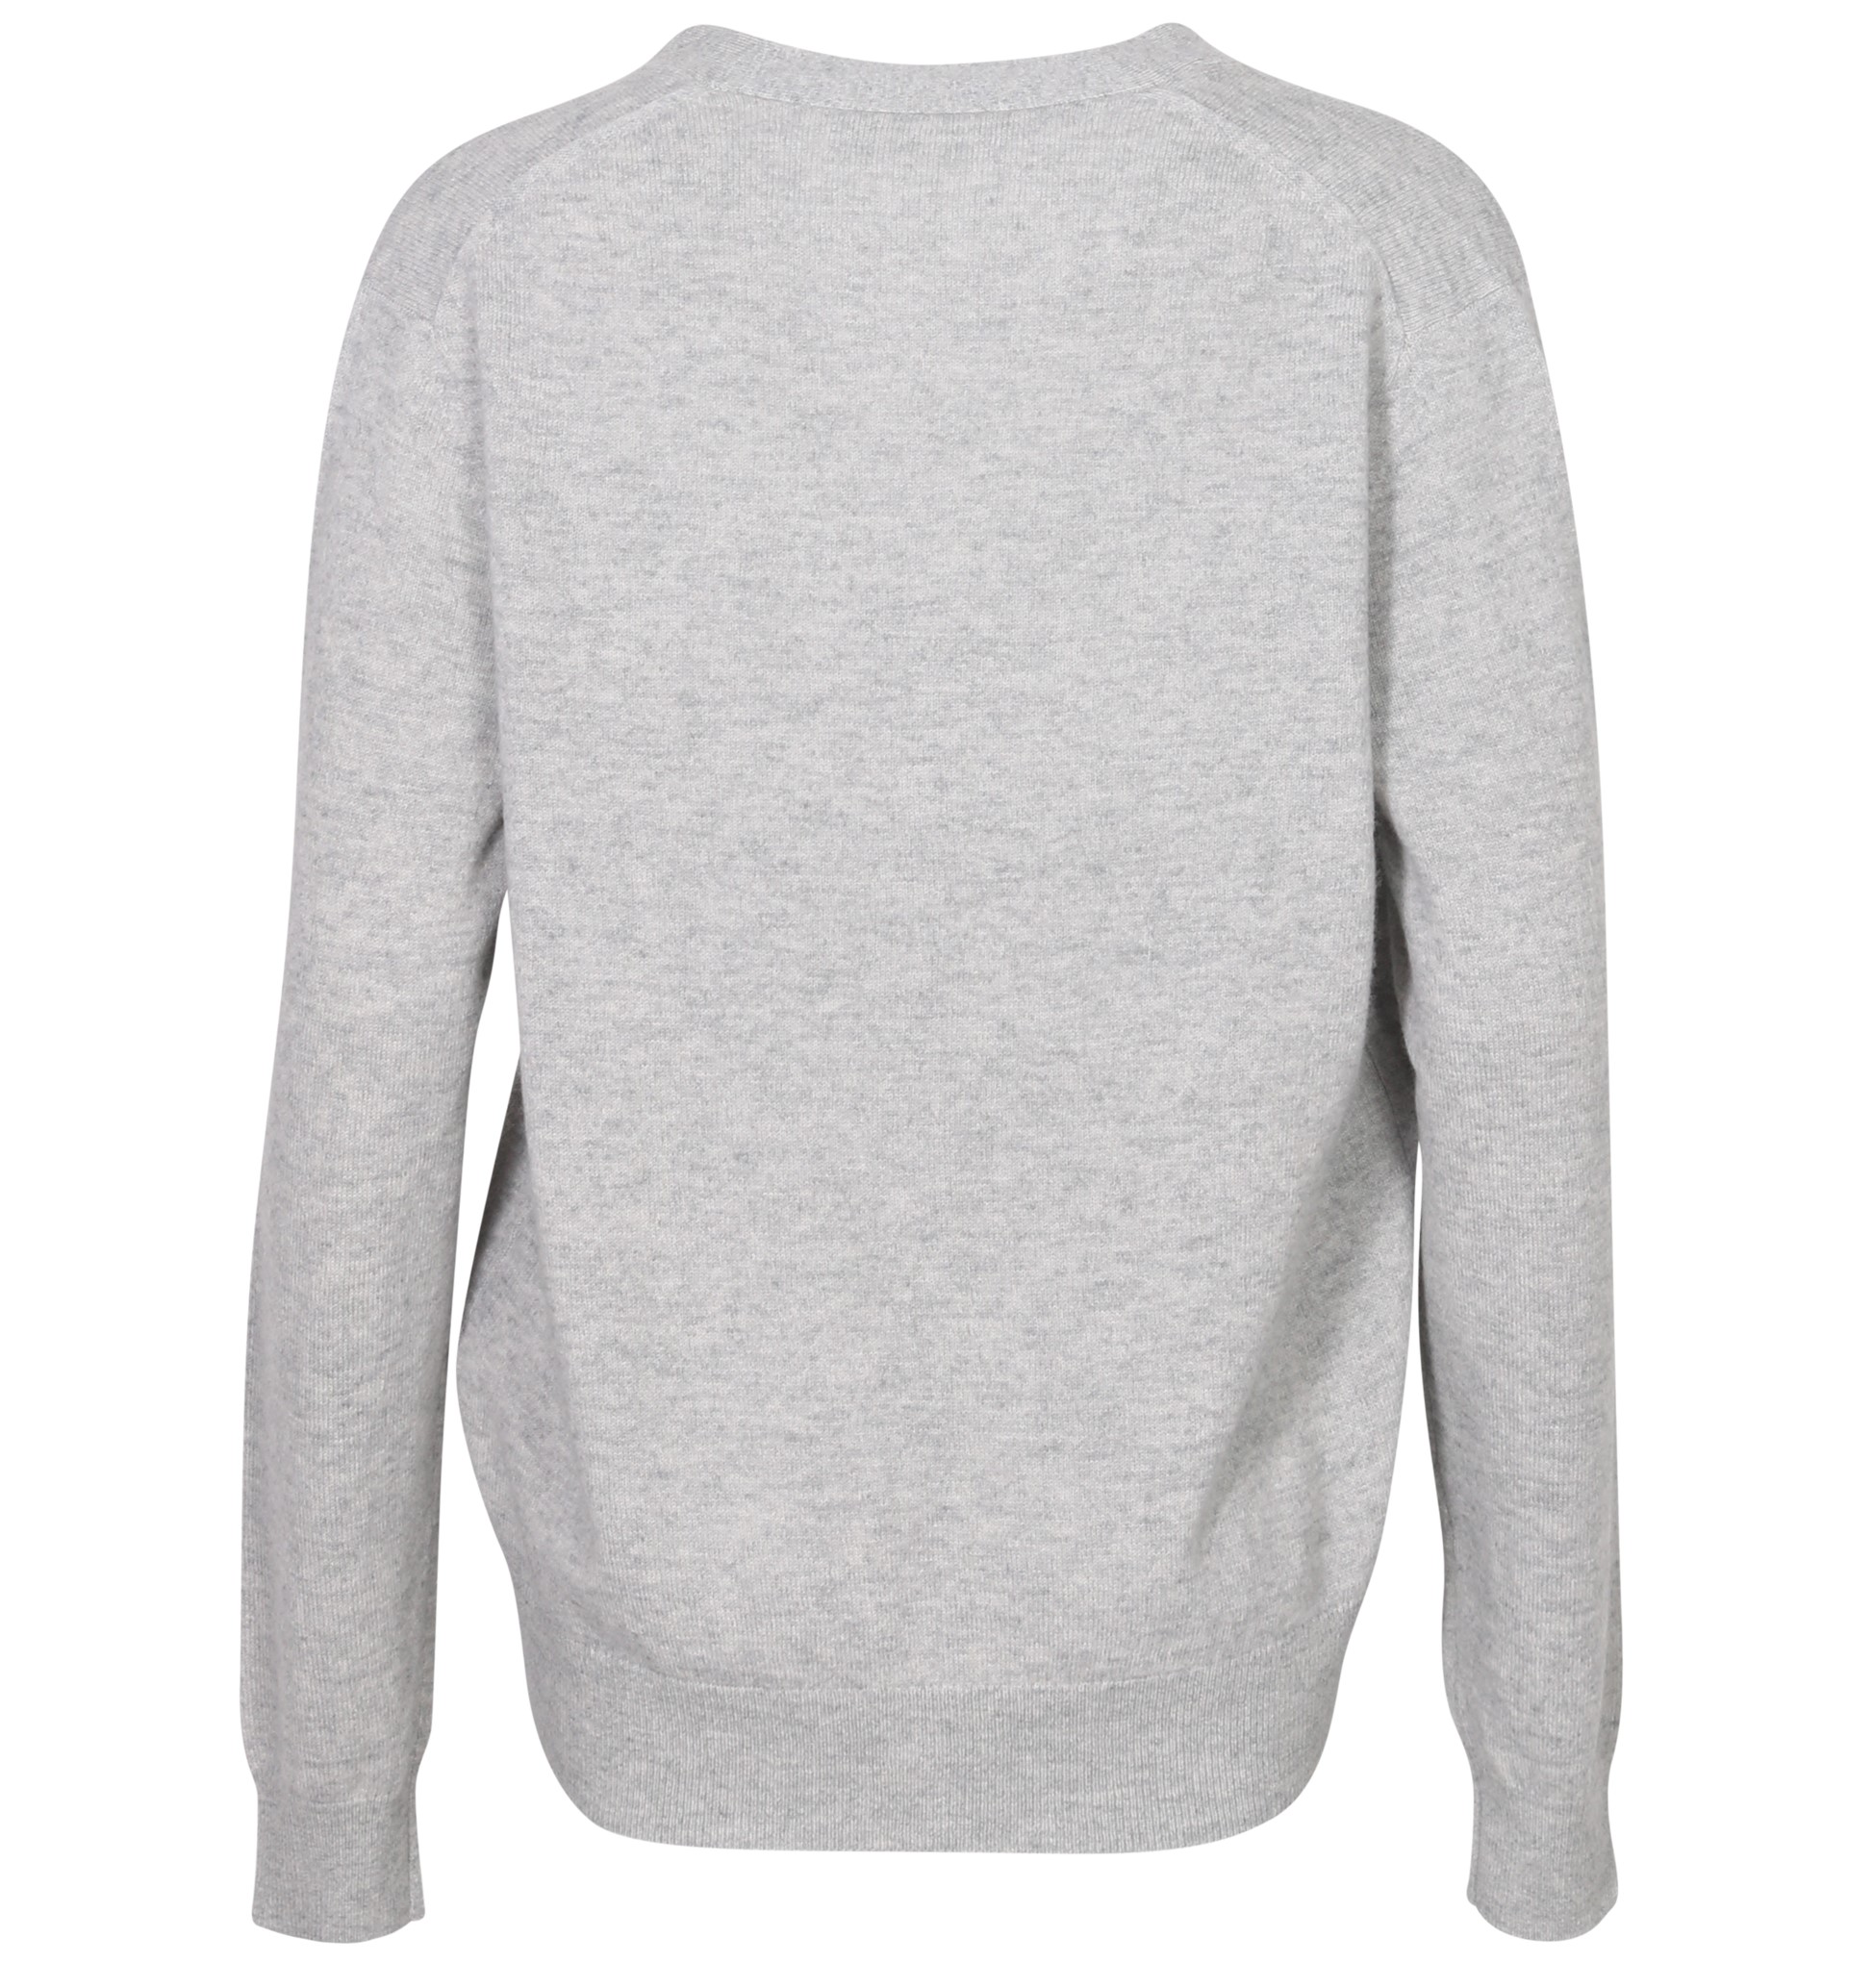 ACNE STUDIOS Face Knit Cardigan in Light Grey Melange XL